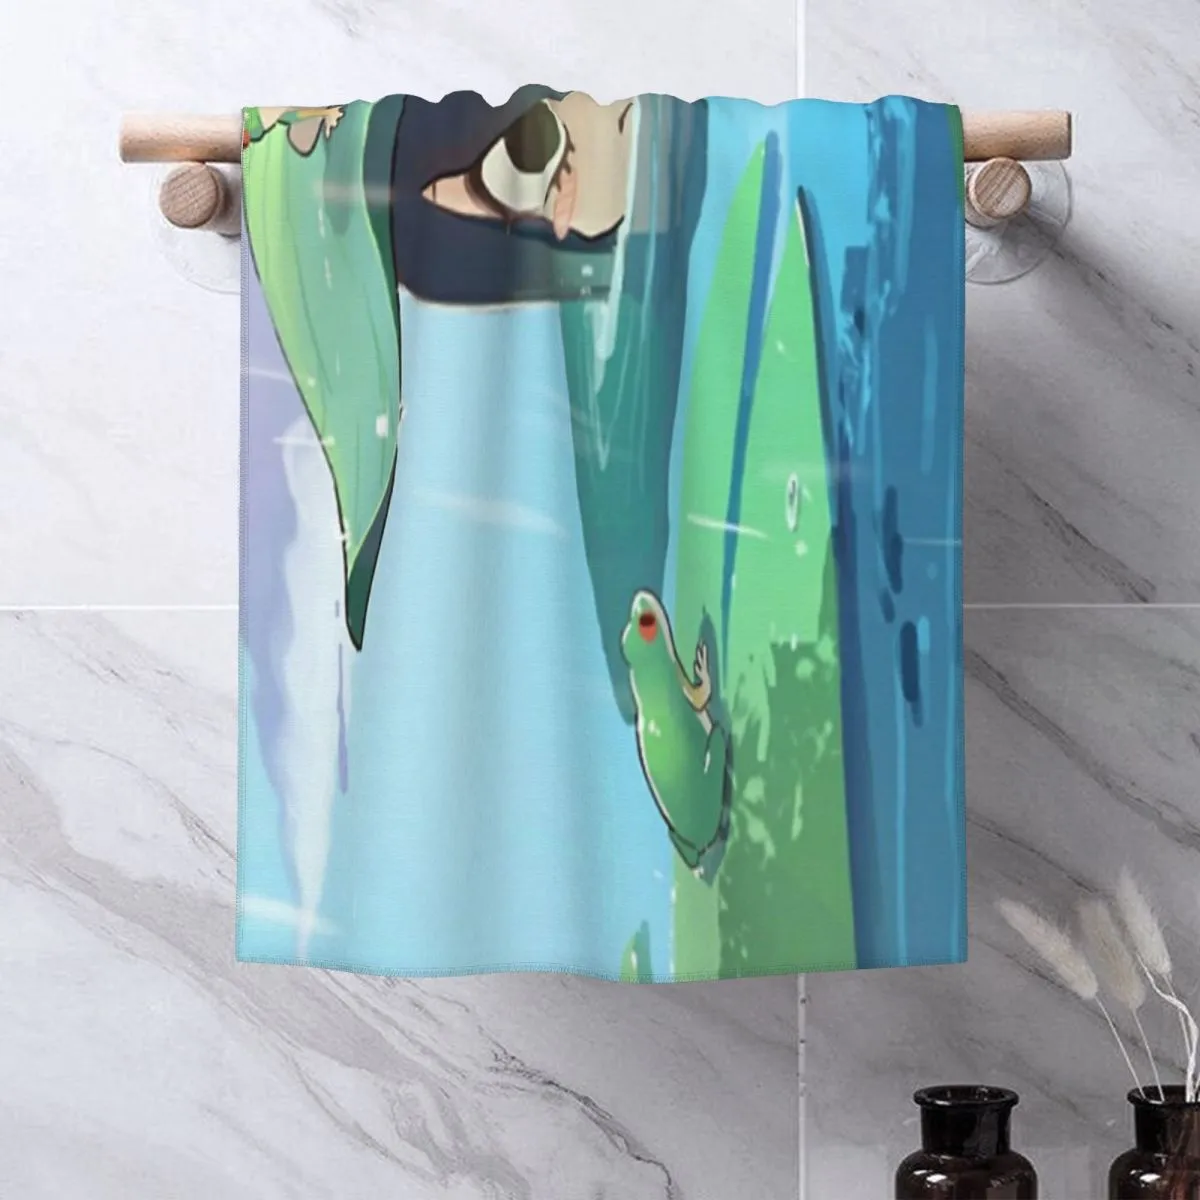 Tsuyu Asui Towels Face Towel Towel Bathrobes Bath Clothing Towel for Kitchen Bathrobe for Women